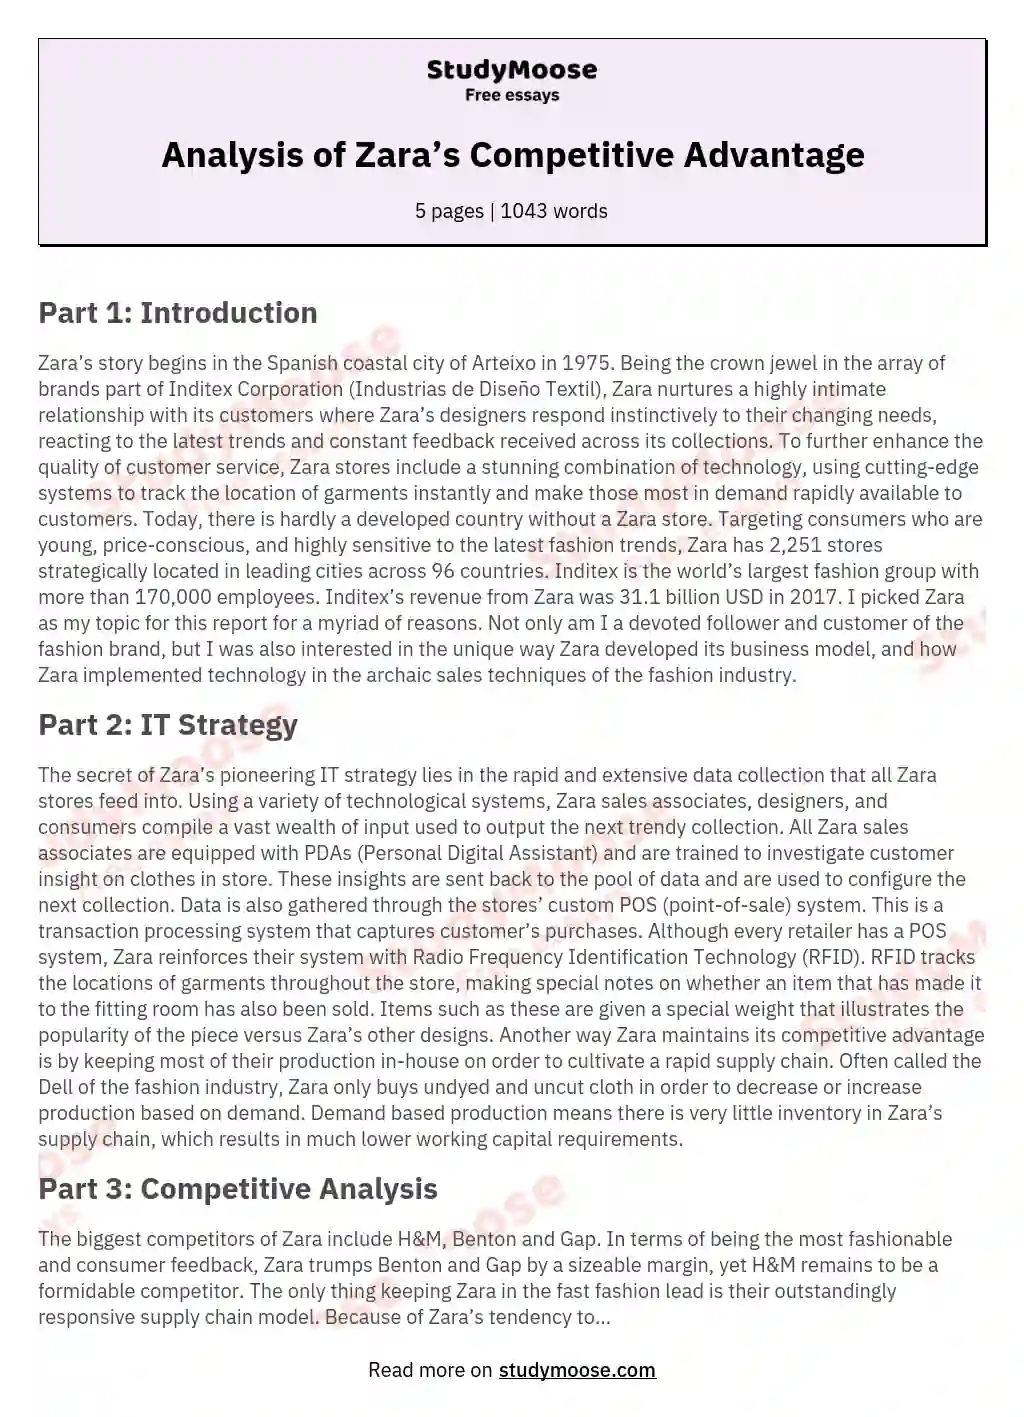 Analysis of Zara’s Competitive Advantage essay